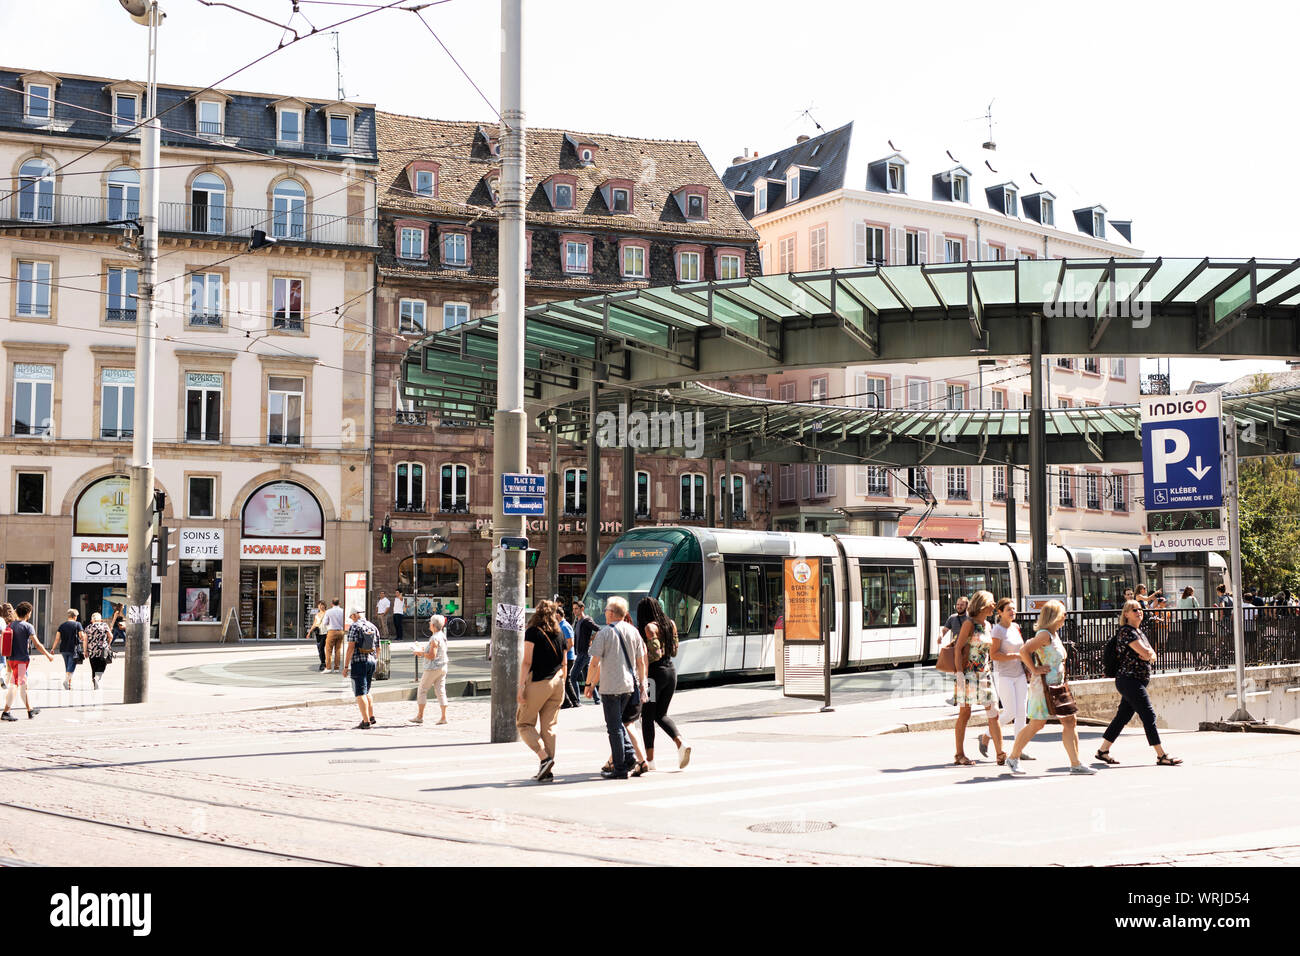 The tram station at Place de l'Homme de Fer in Strasbourg, France. Stock Photo